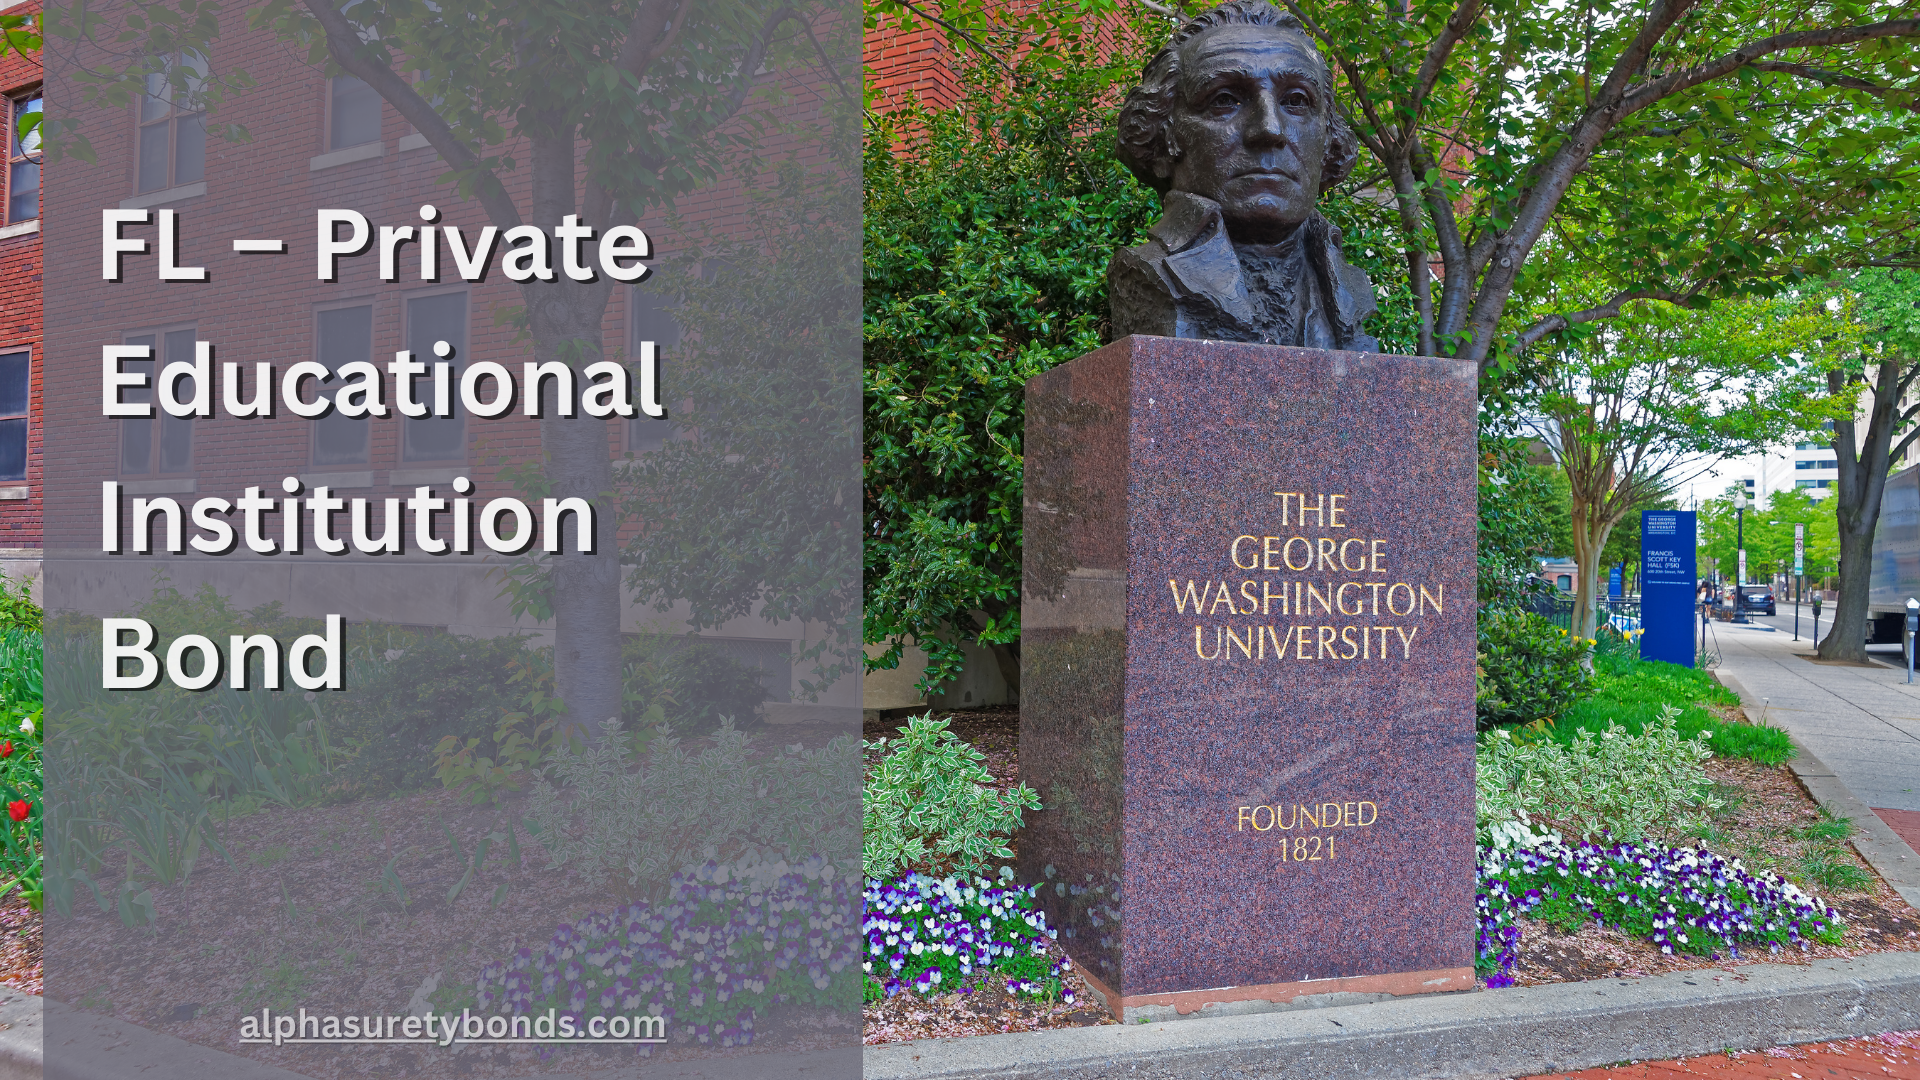 FL – Private Educational Institution Bond